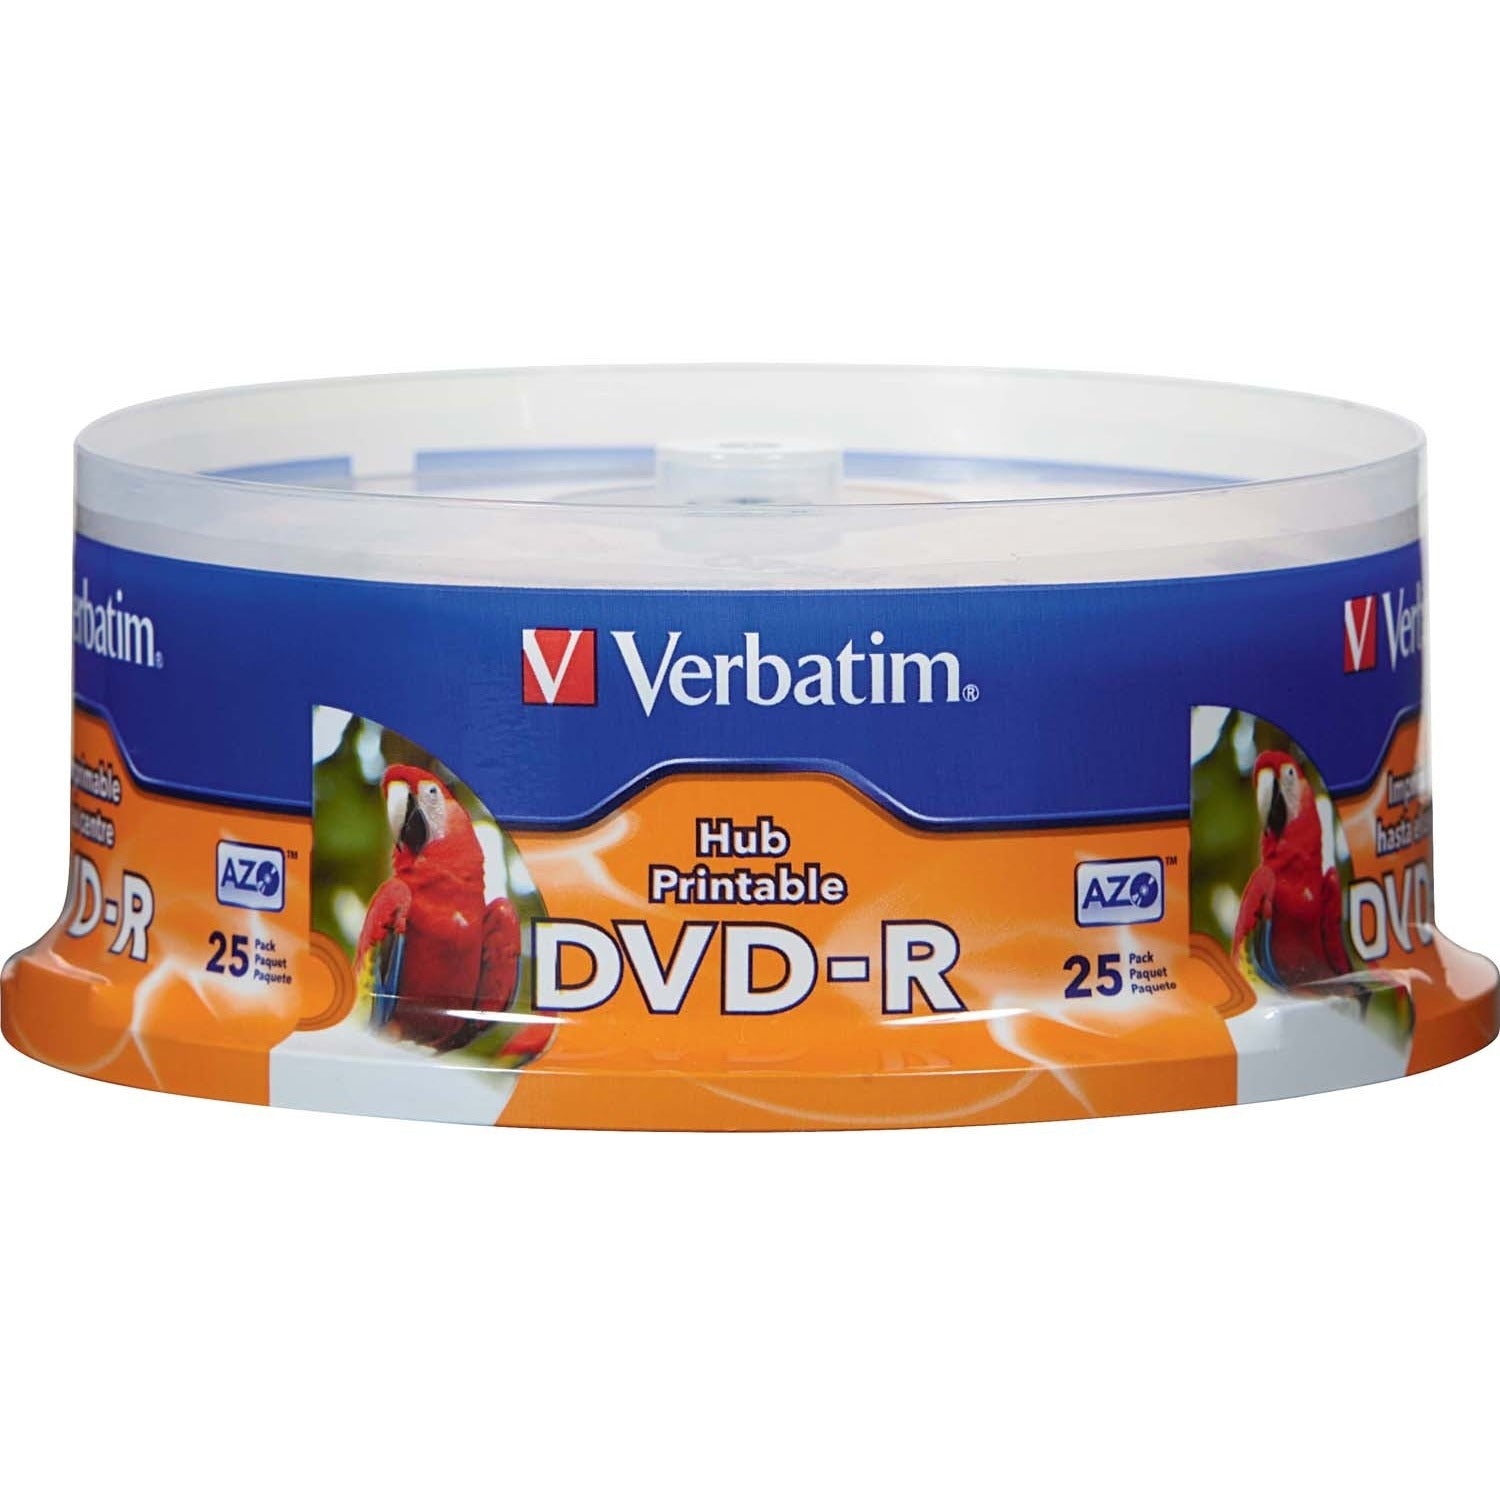 DVD-R 4.7GB 16X White Inkjet Printable, Hub Printable - 25pk Spindle - 96191